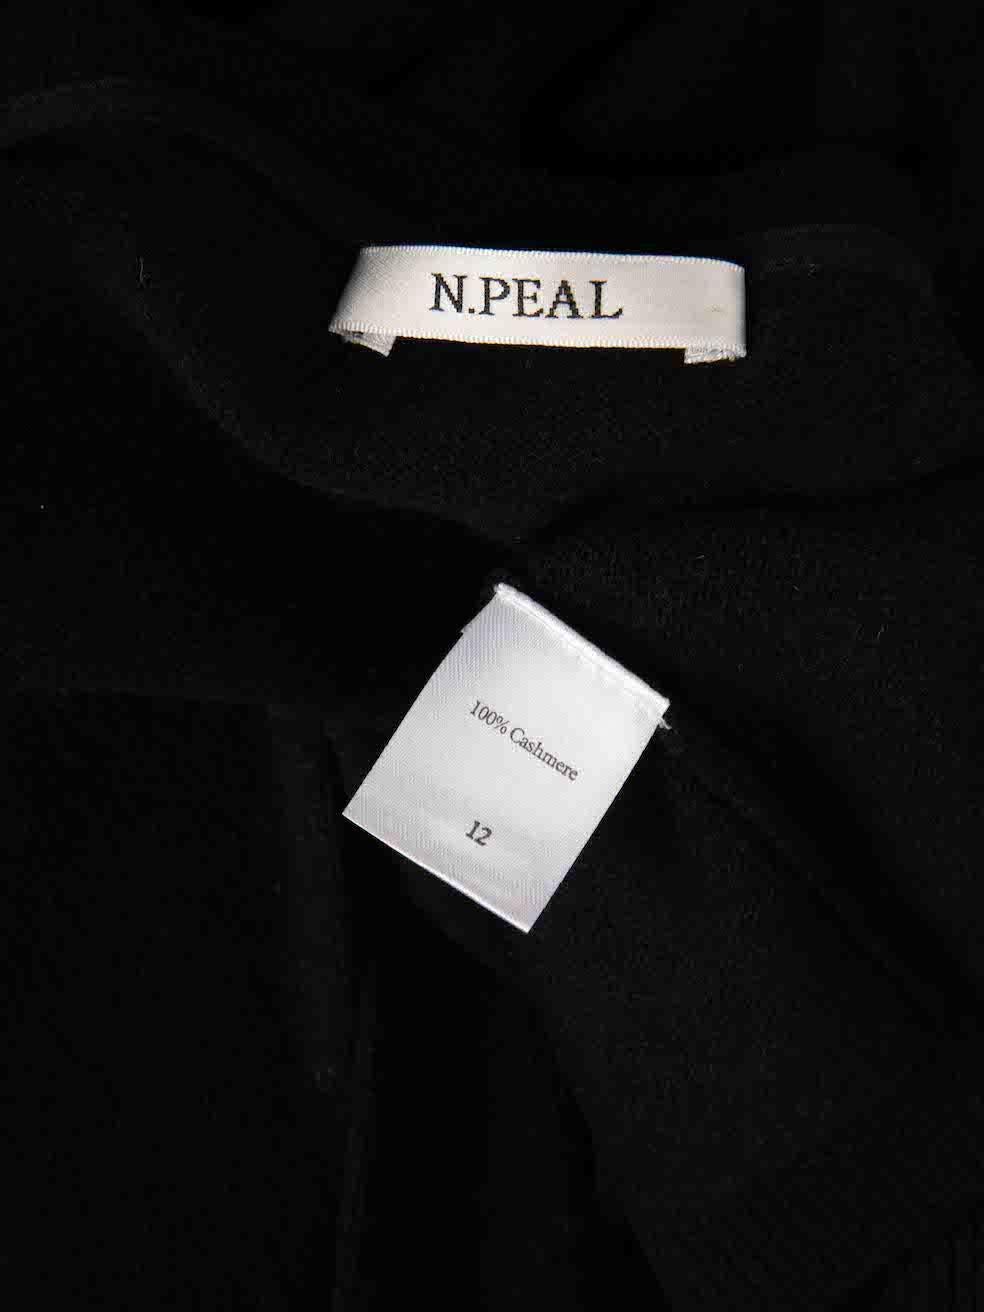 N. PEAL Black V-Neck Cashmere Knit Top Size S For Sale 1